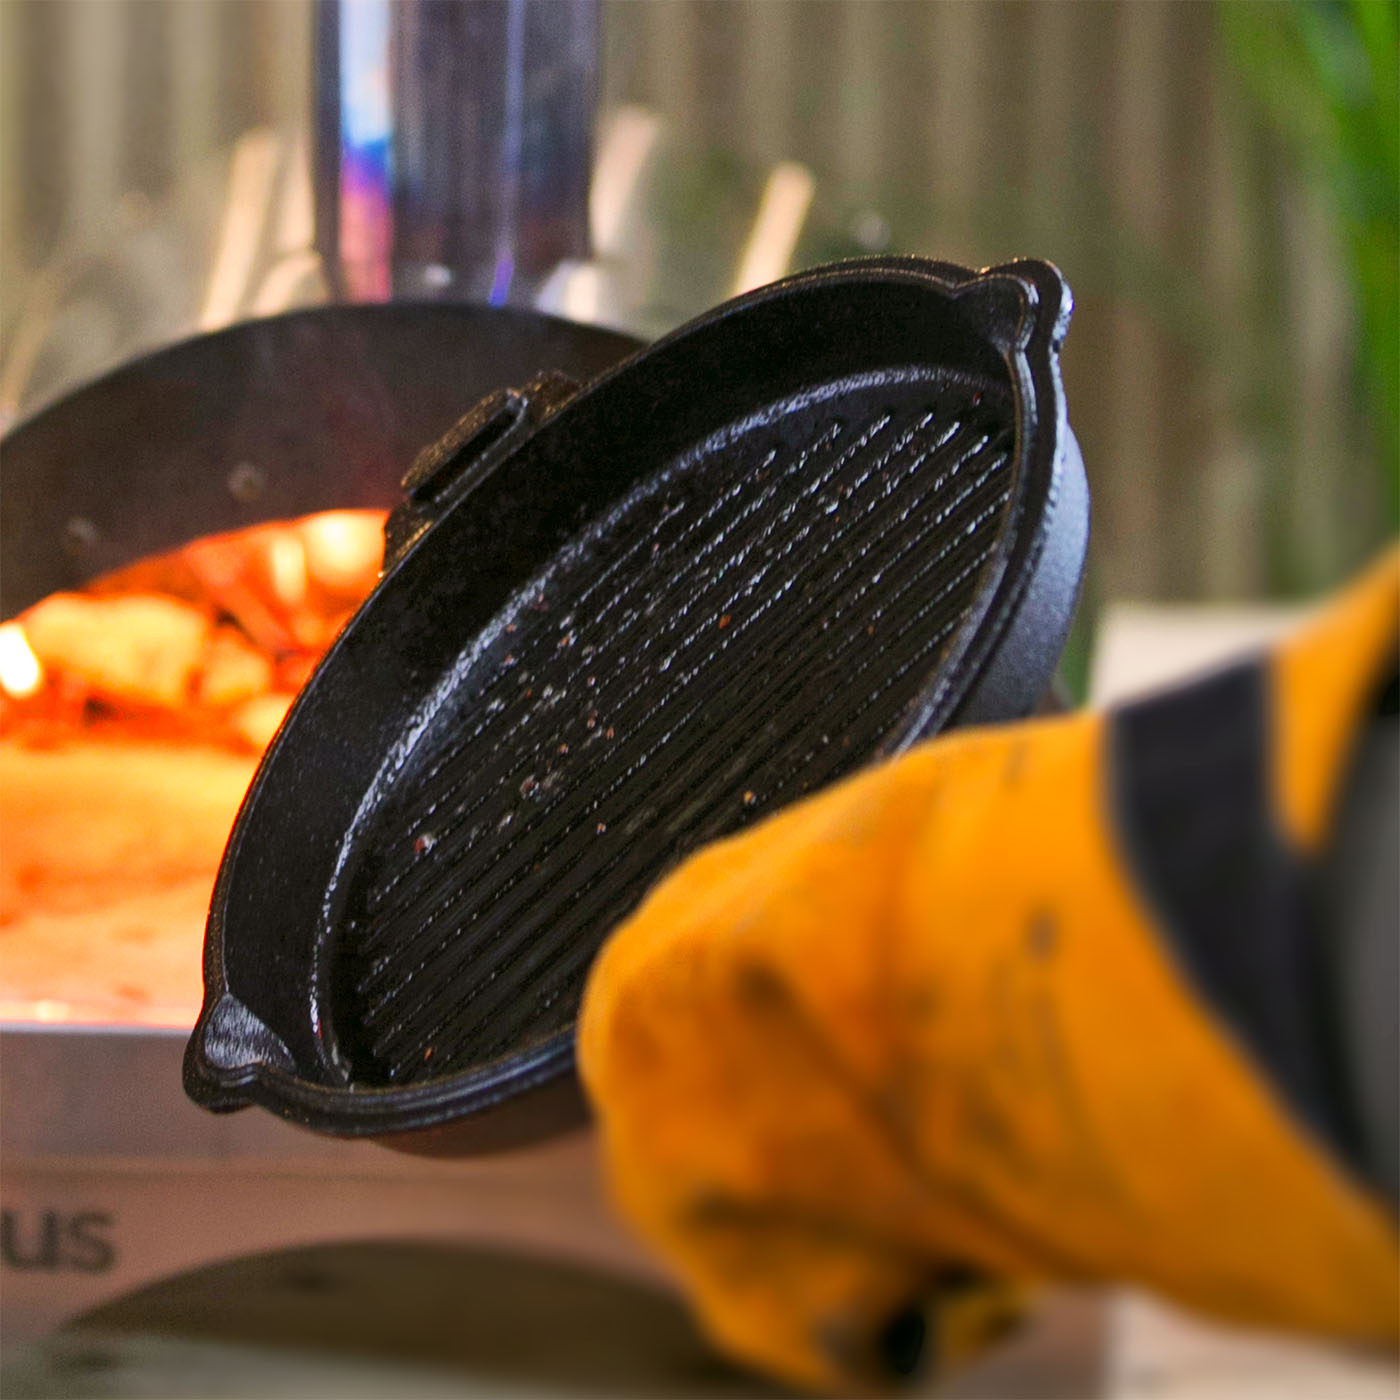 Igneus 2 part cast iron pan set - Igneus wood fired pizza ovens 2 part set -